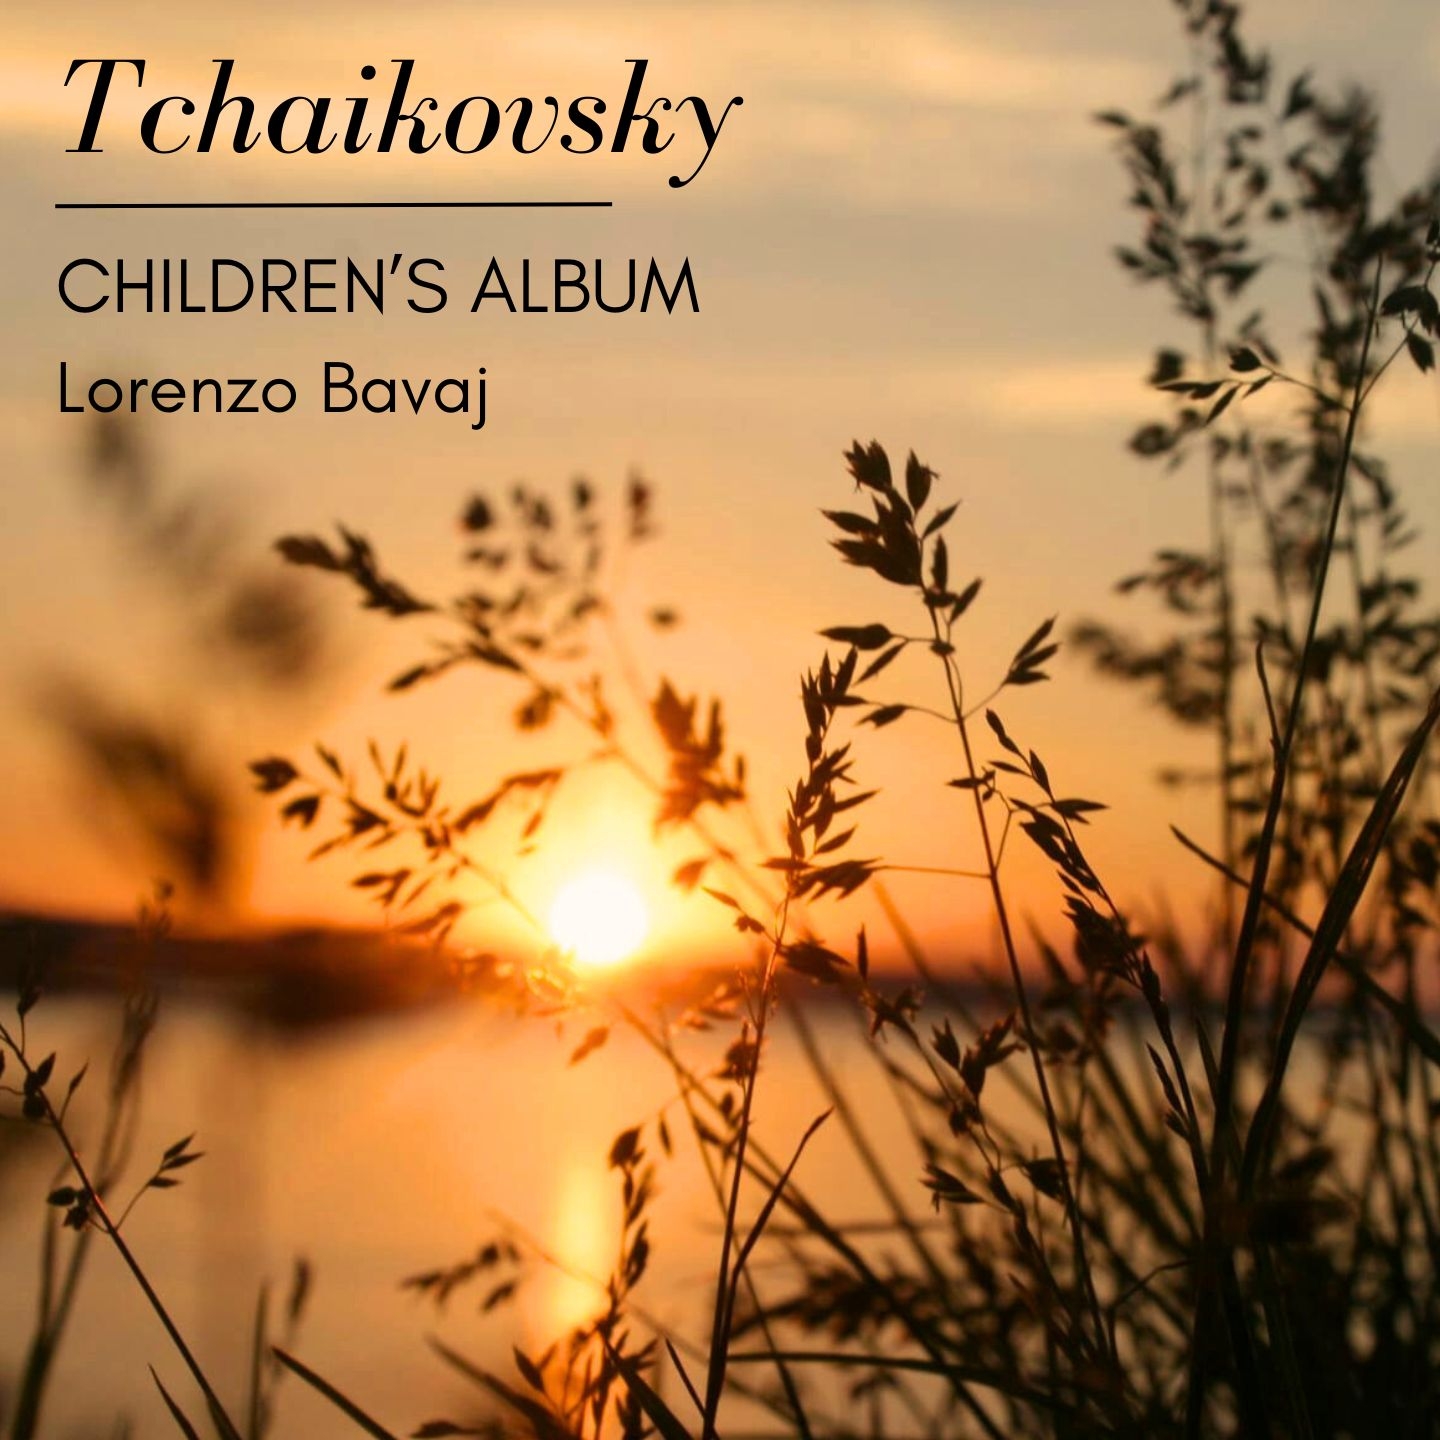 Tchaikovsky: Children’s Album, Op. 39